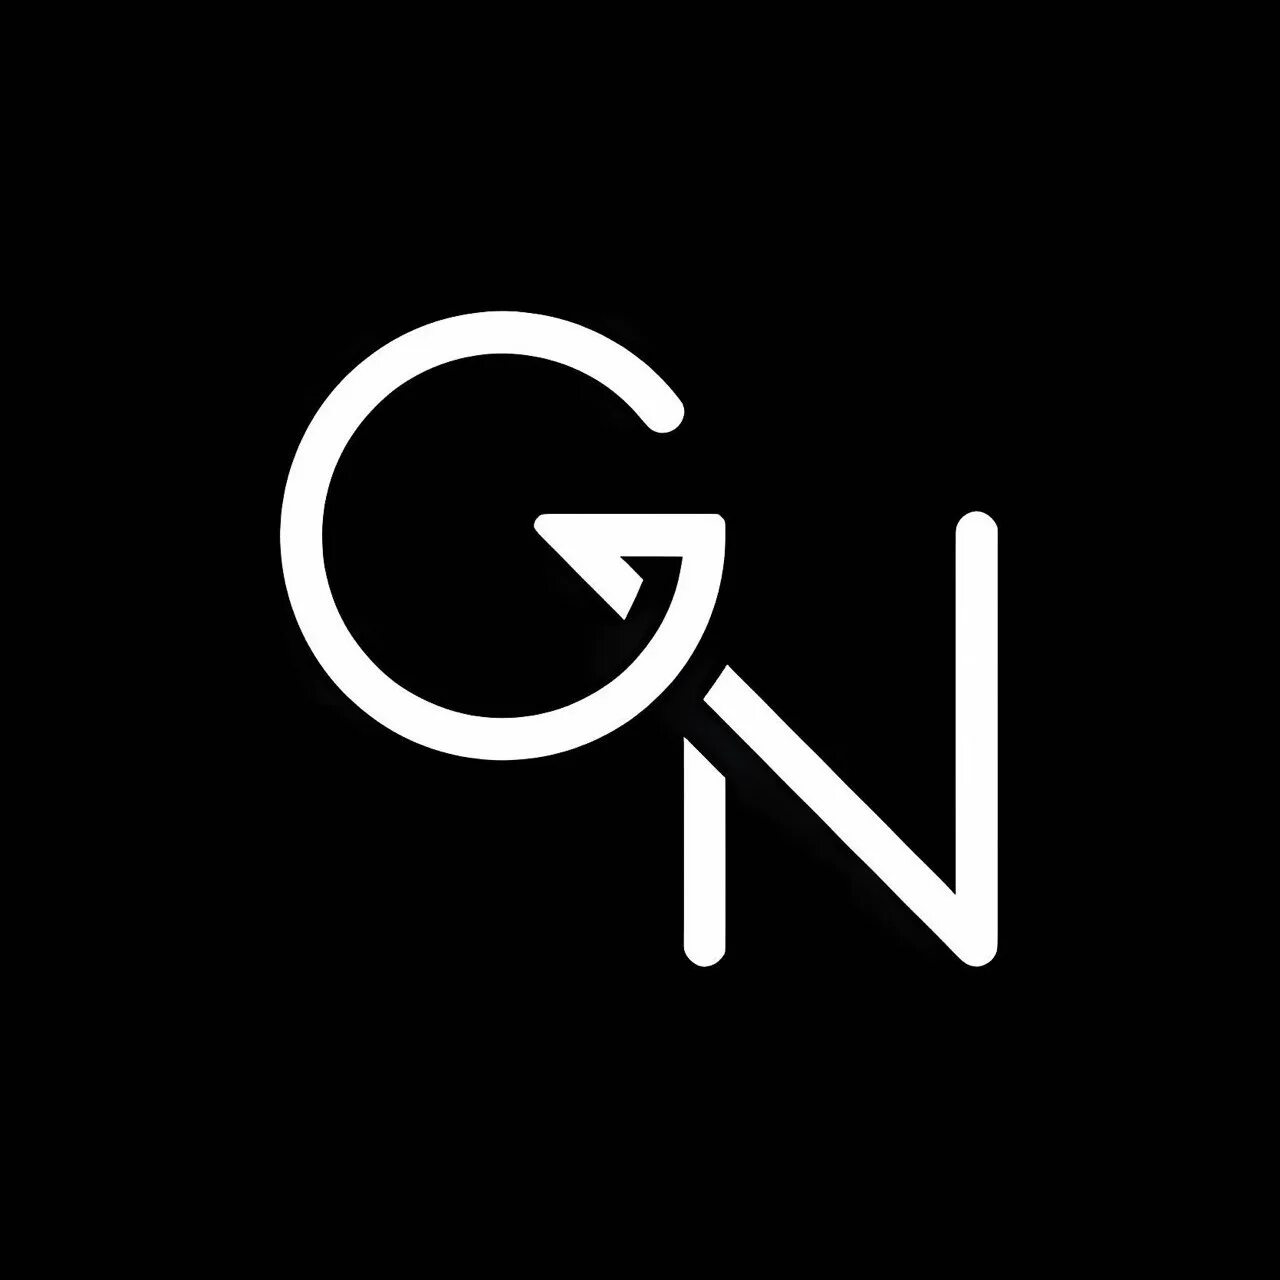 G s up. Логотип GN. Буква g на черном фоне. Буквы ng для логотипа. Логотип с буквой n.